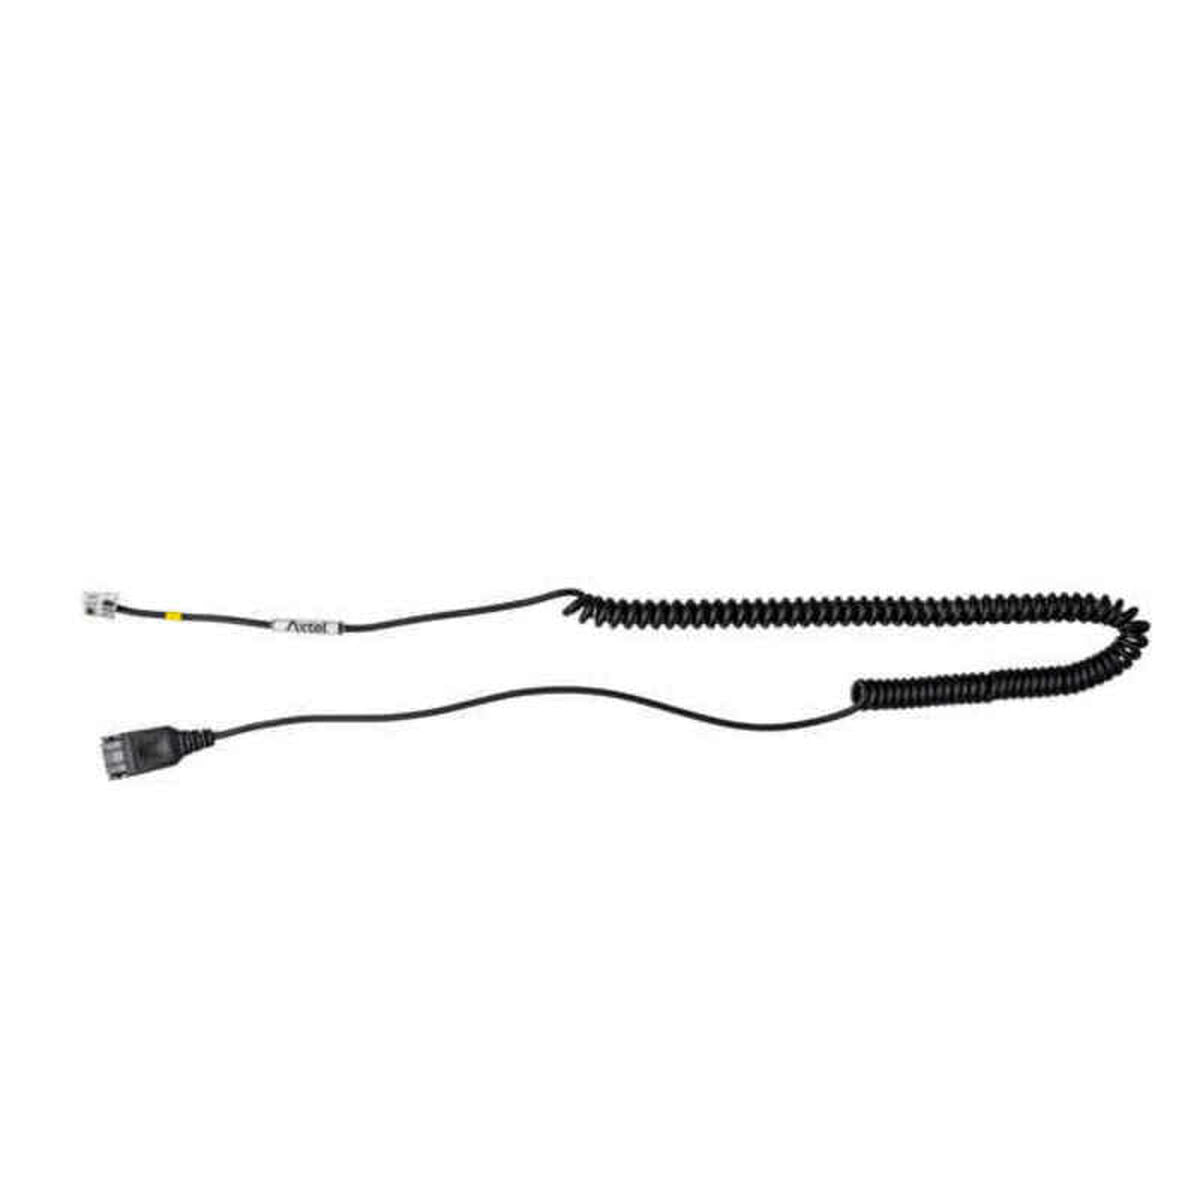 Cablu telefonic axtel AXC-03